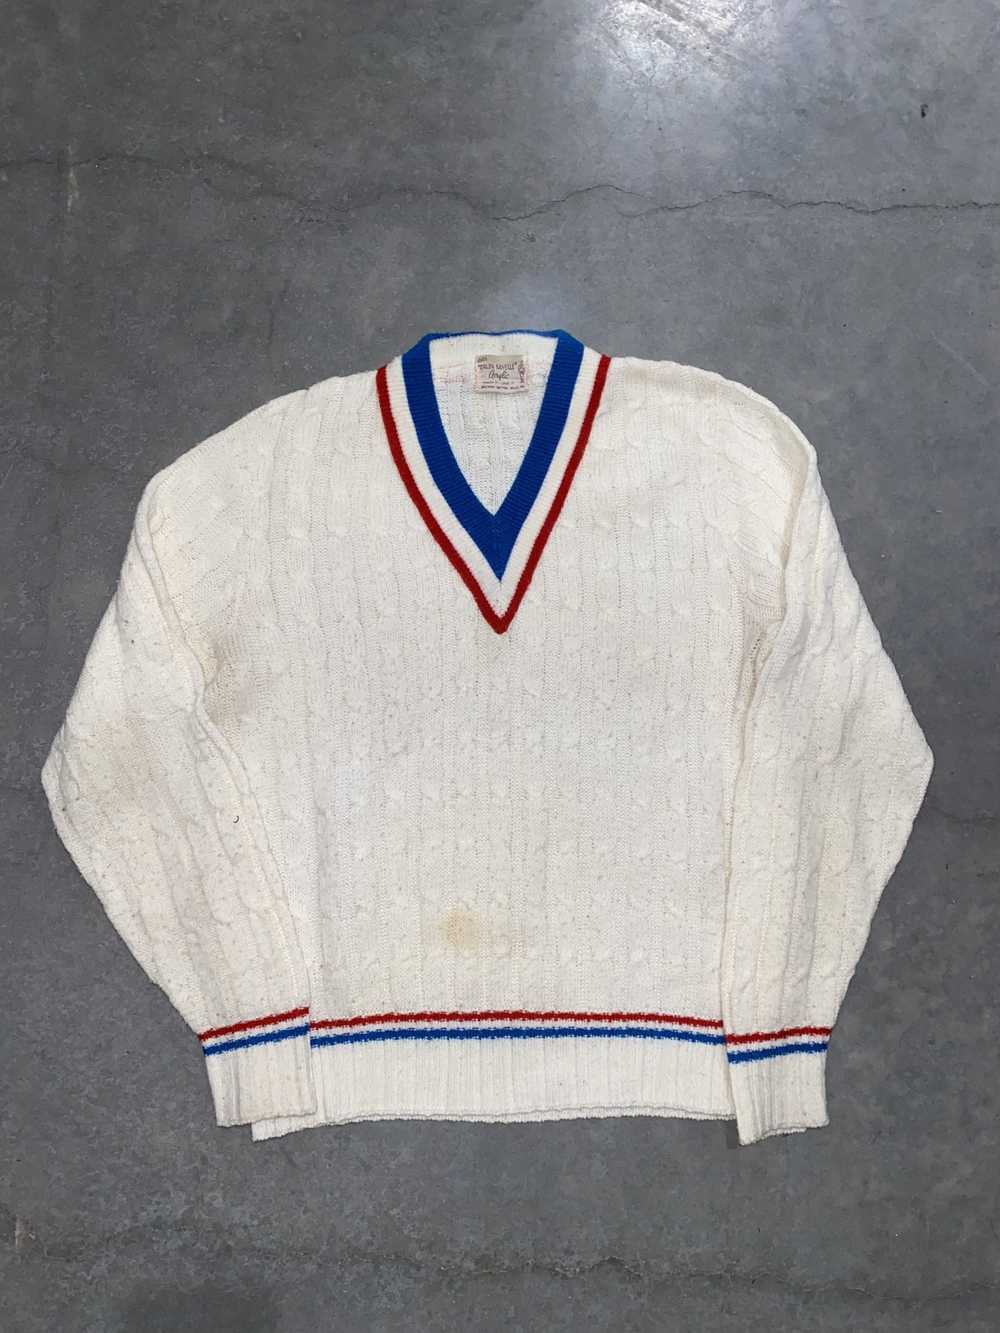 Vintage Vintage 70S Sweater - image 1